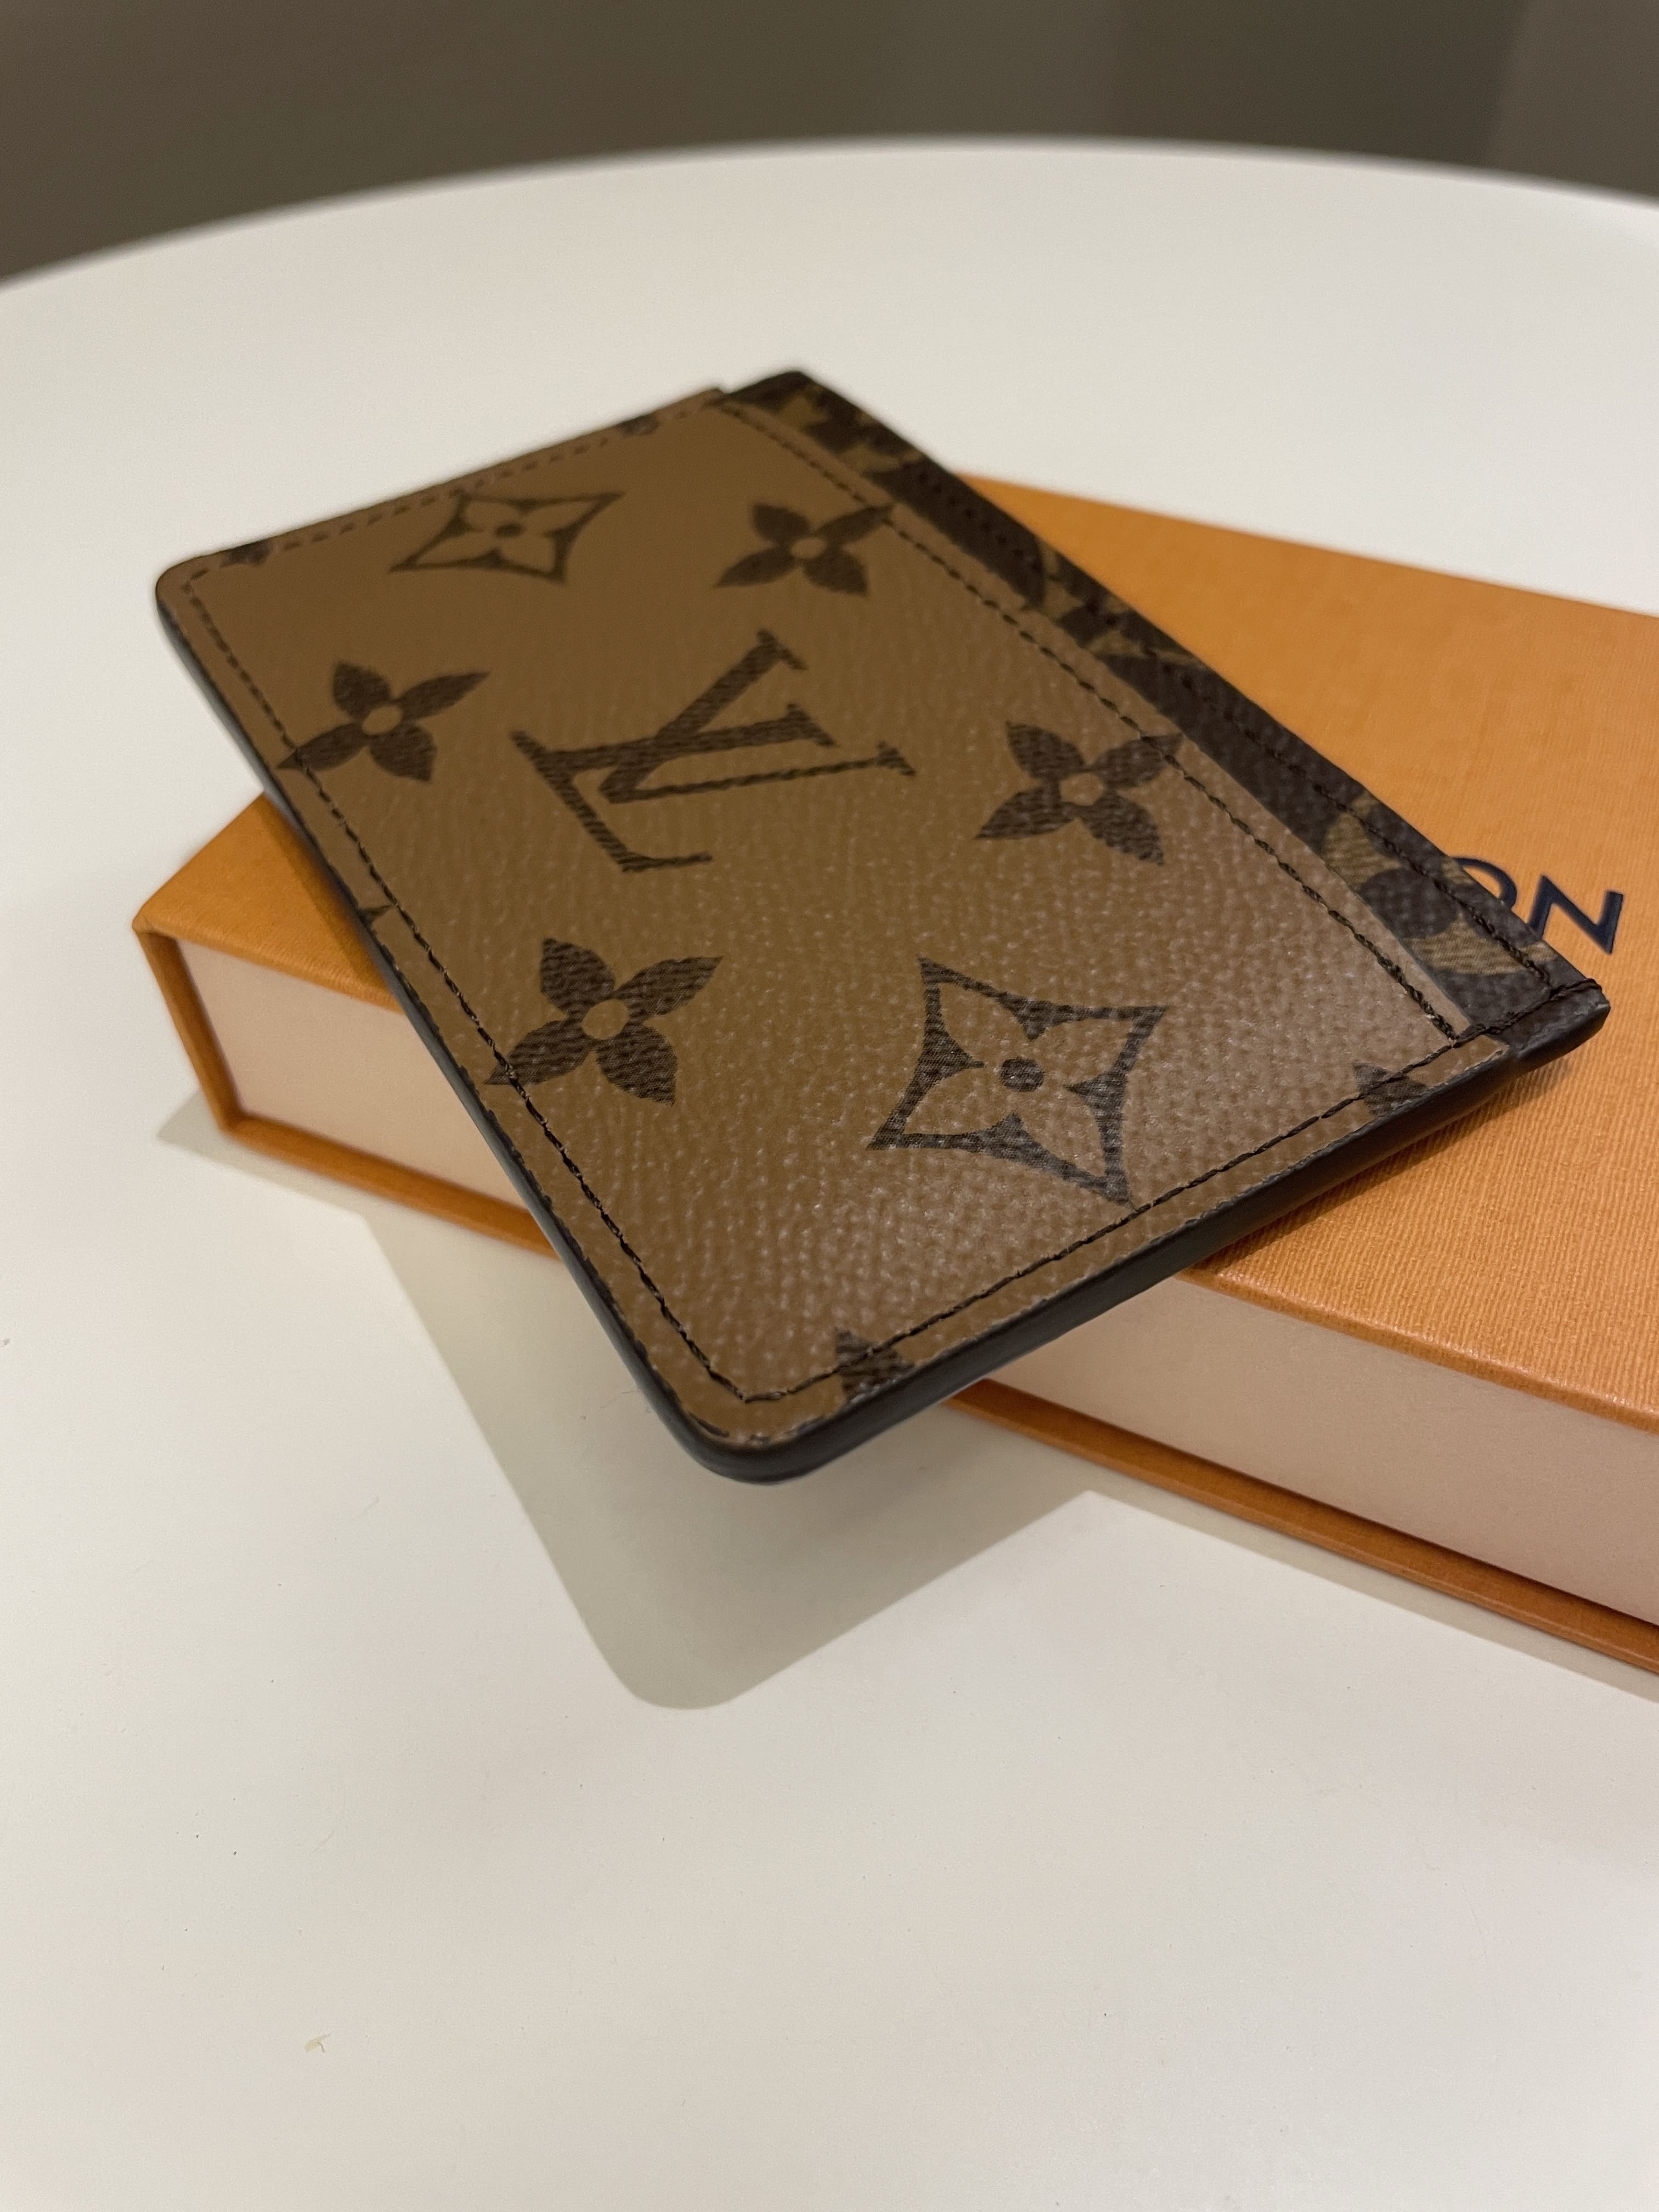 Louis Vuitton Card Holder Reverse Monogram